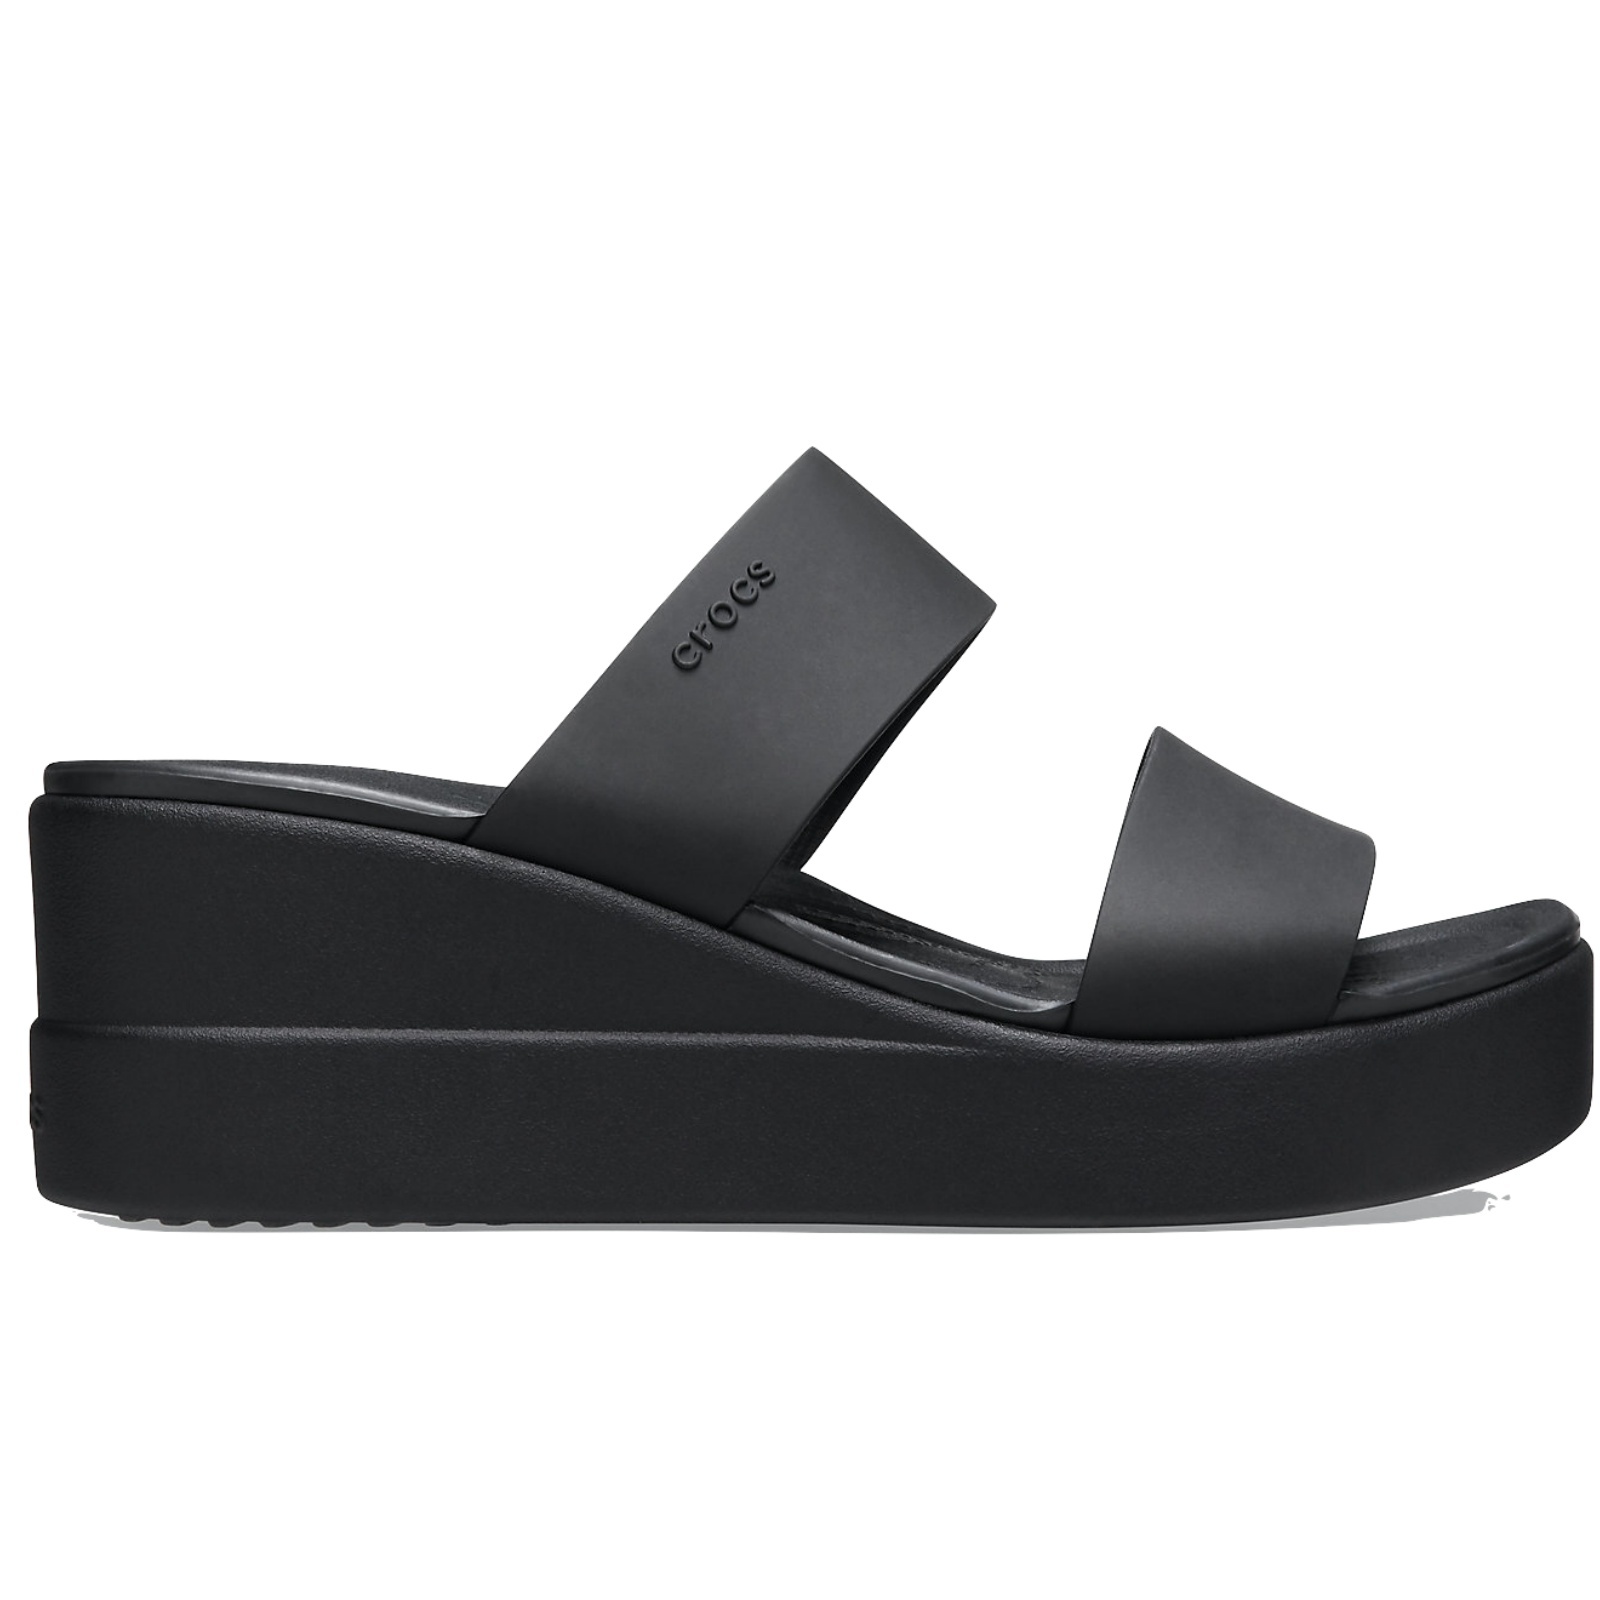 Crocs,Brooklyn Mid Wedge Women's Shoes Wedges Heel Sandals LiteRide ...